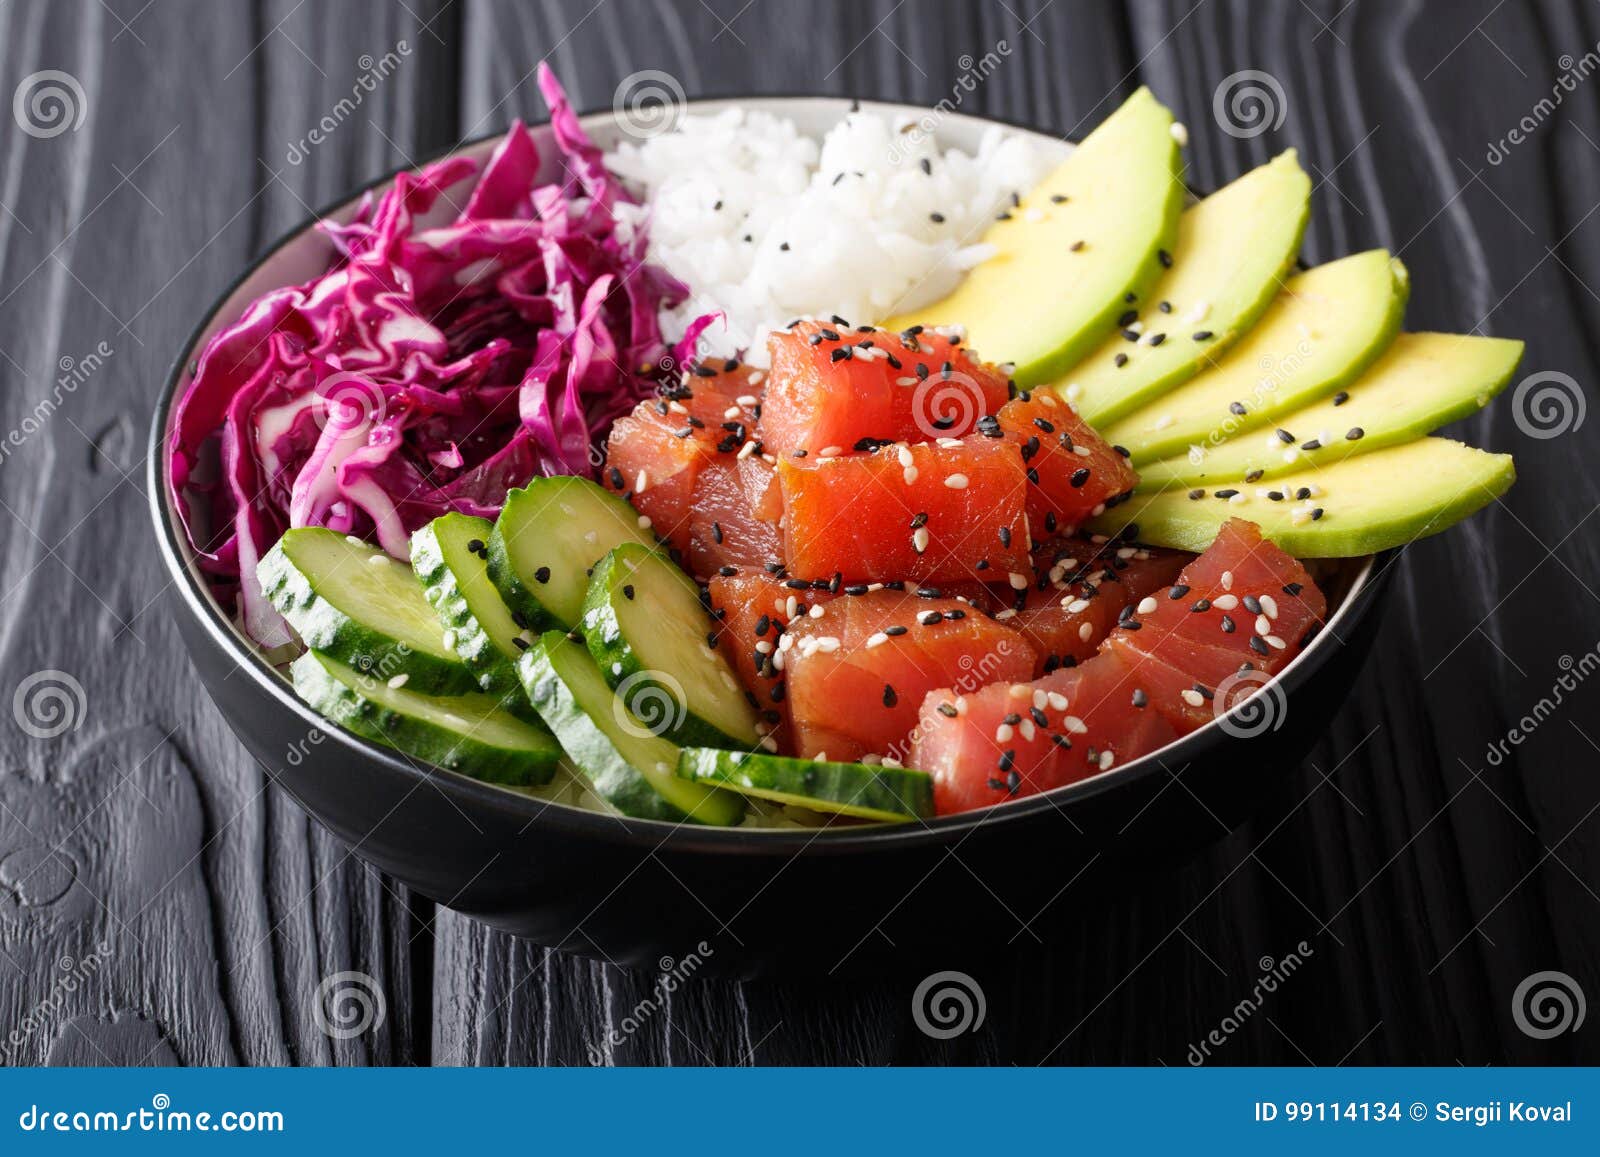 organic food: tuna poke bowl with rice, fresh cucumbers, red cab